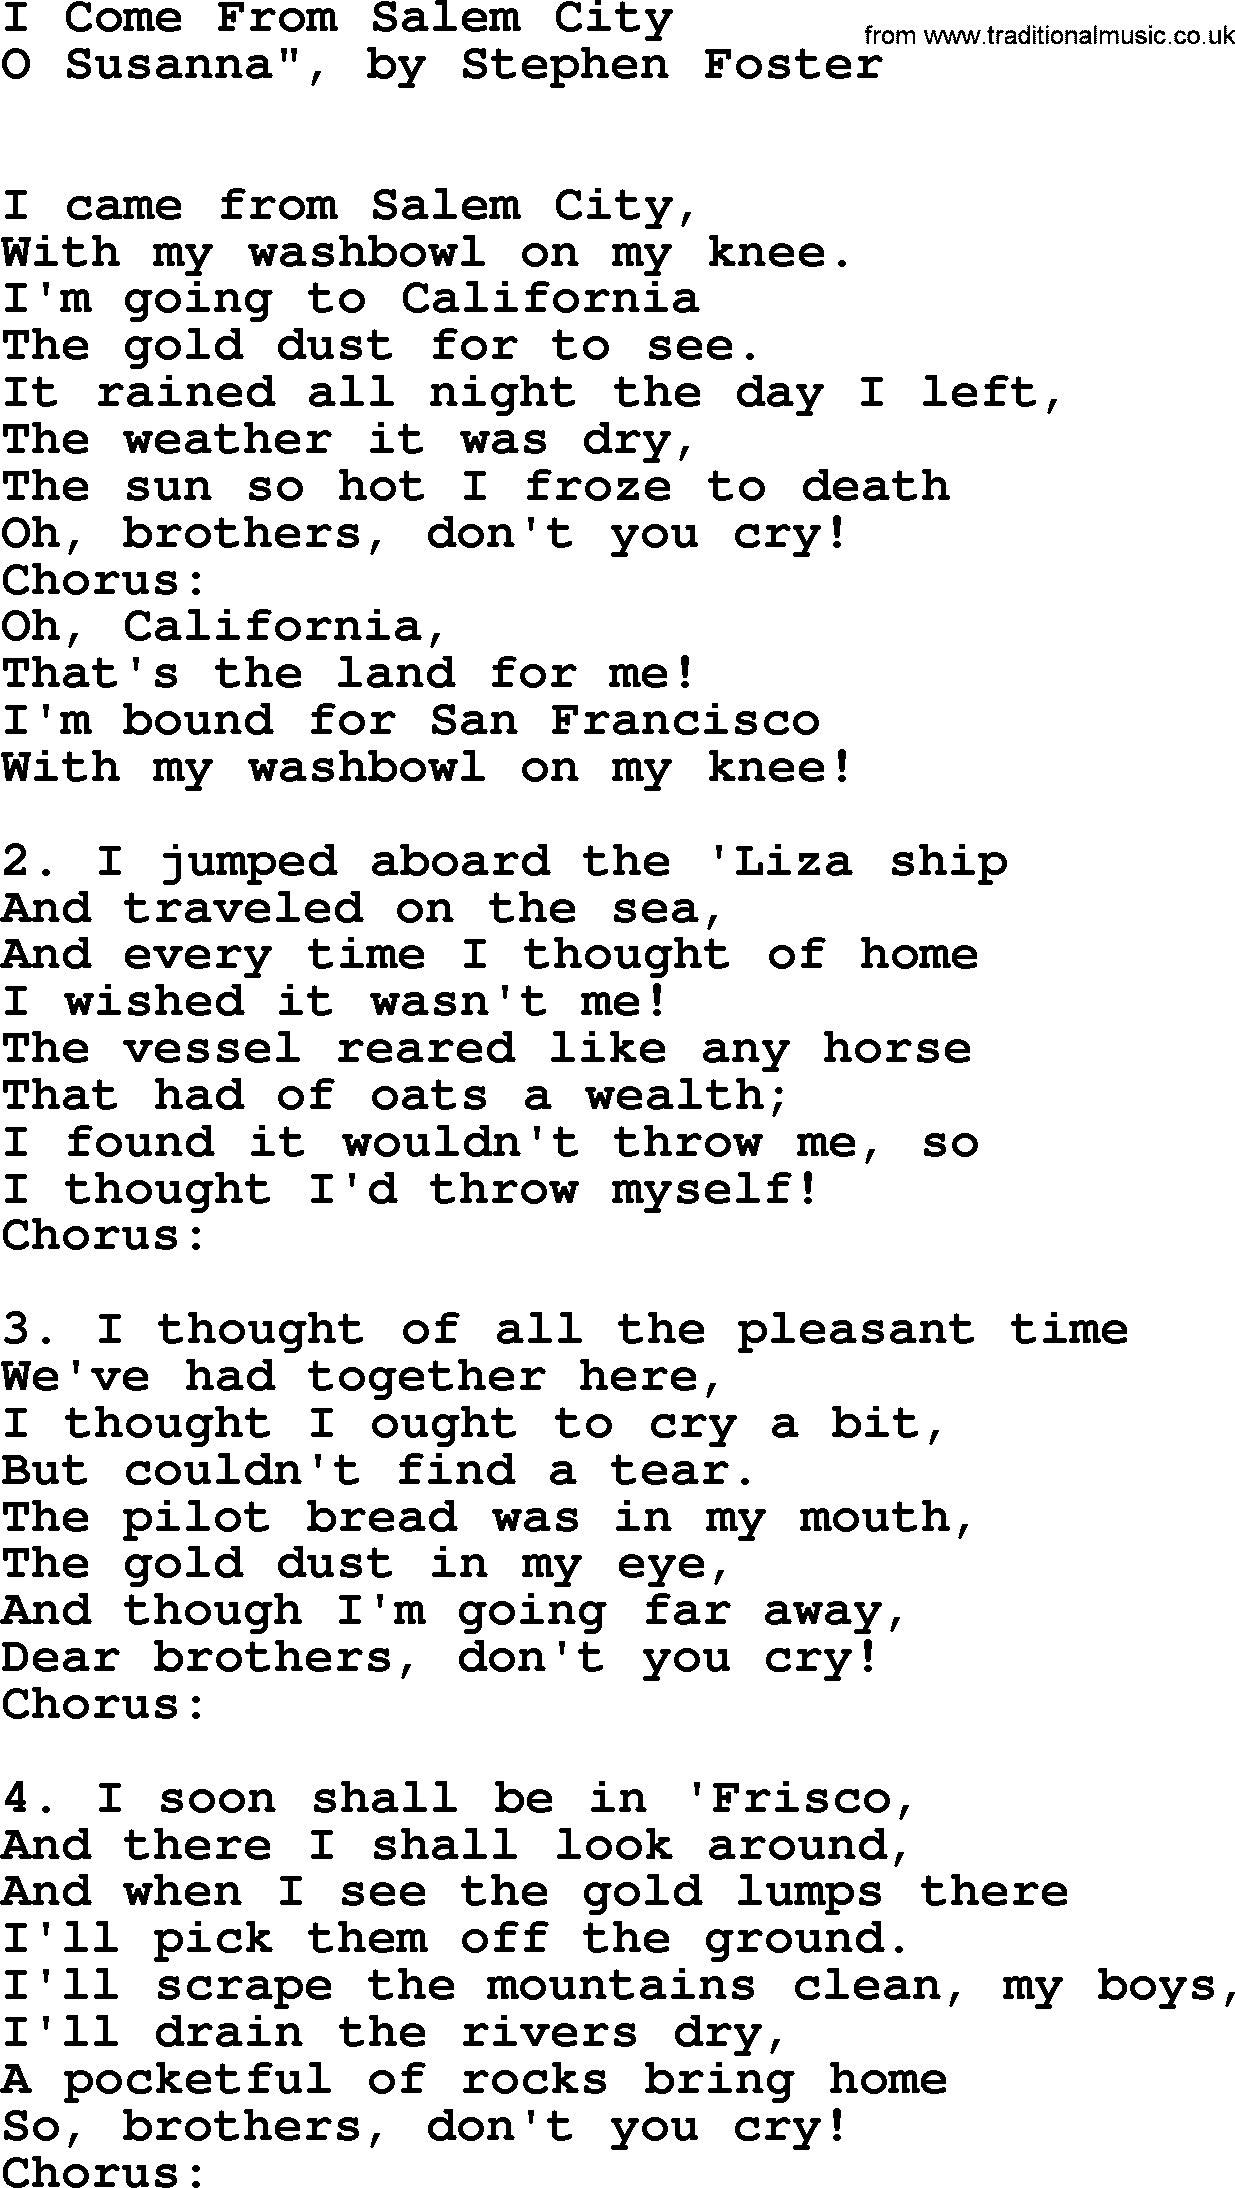 Sea Song or Shantie: I Come From Salem City, lyrics